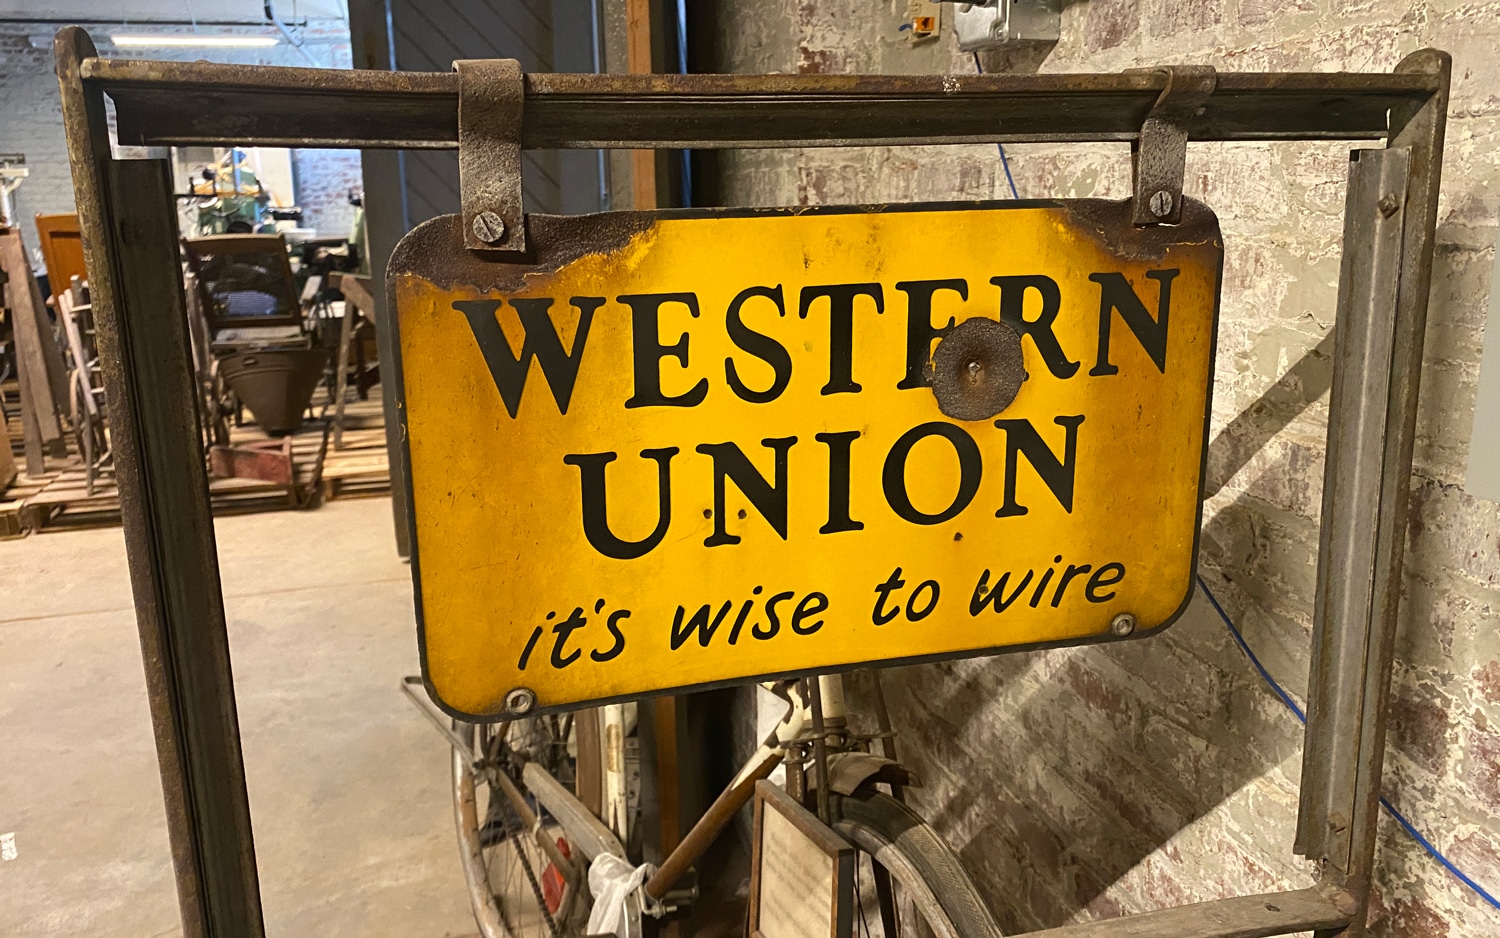 western union sign on bike rack